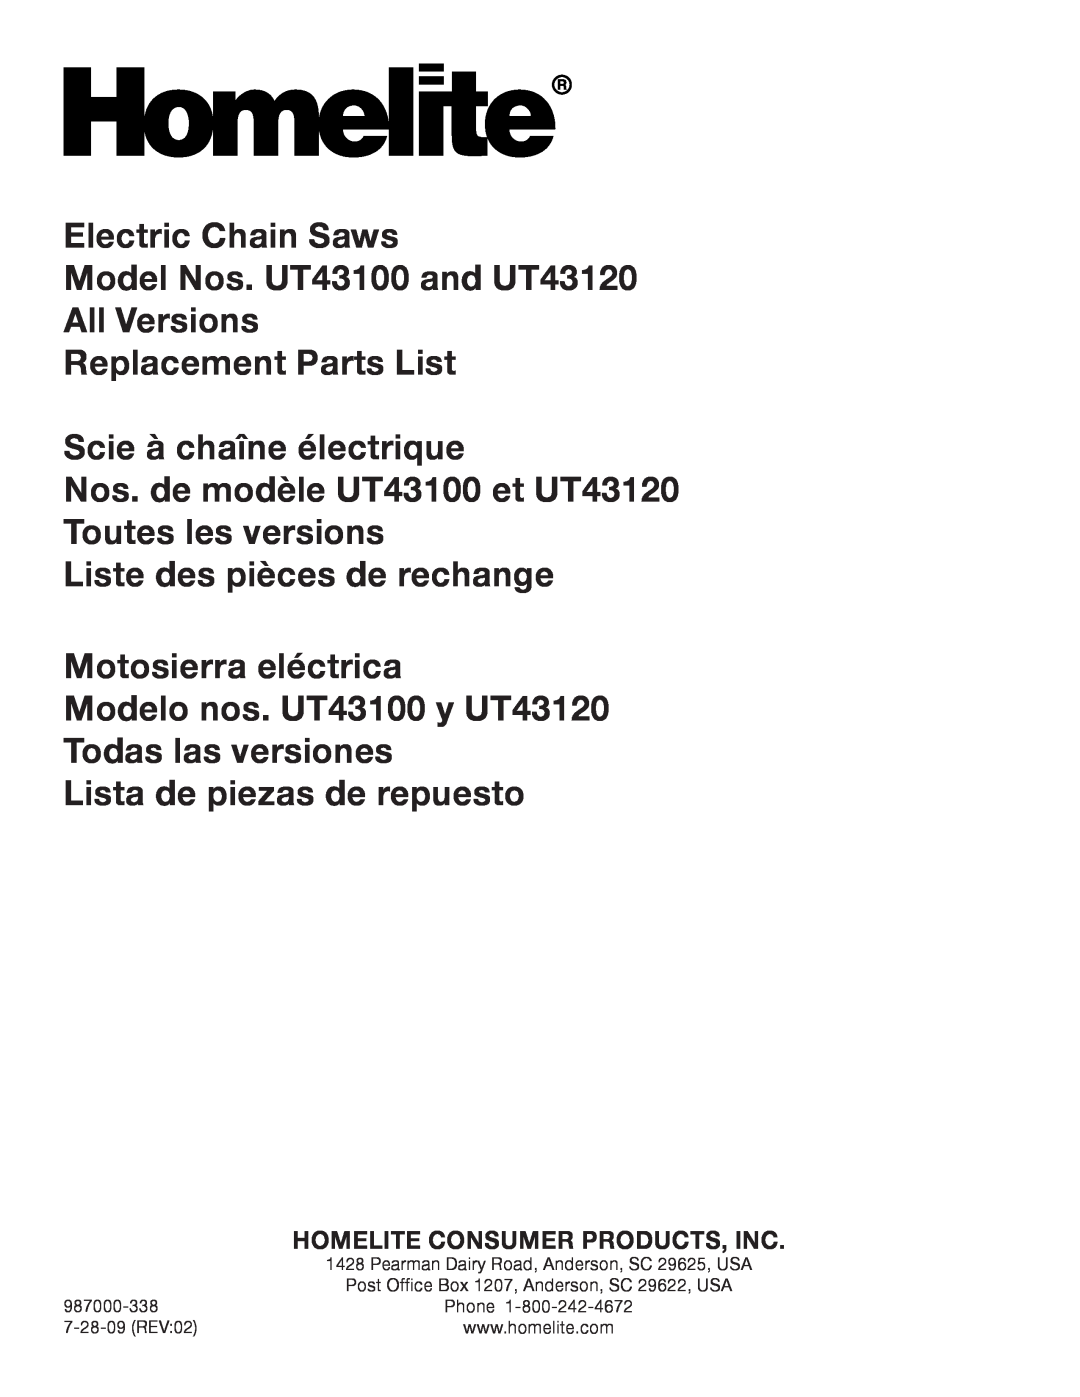 Homelite UT43120, ut43100 manual electric Chain Saws 